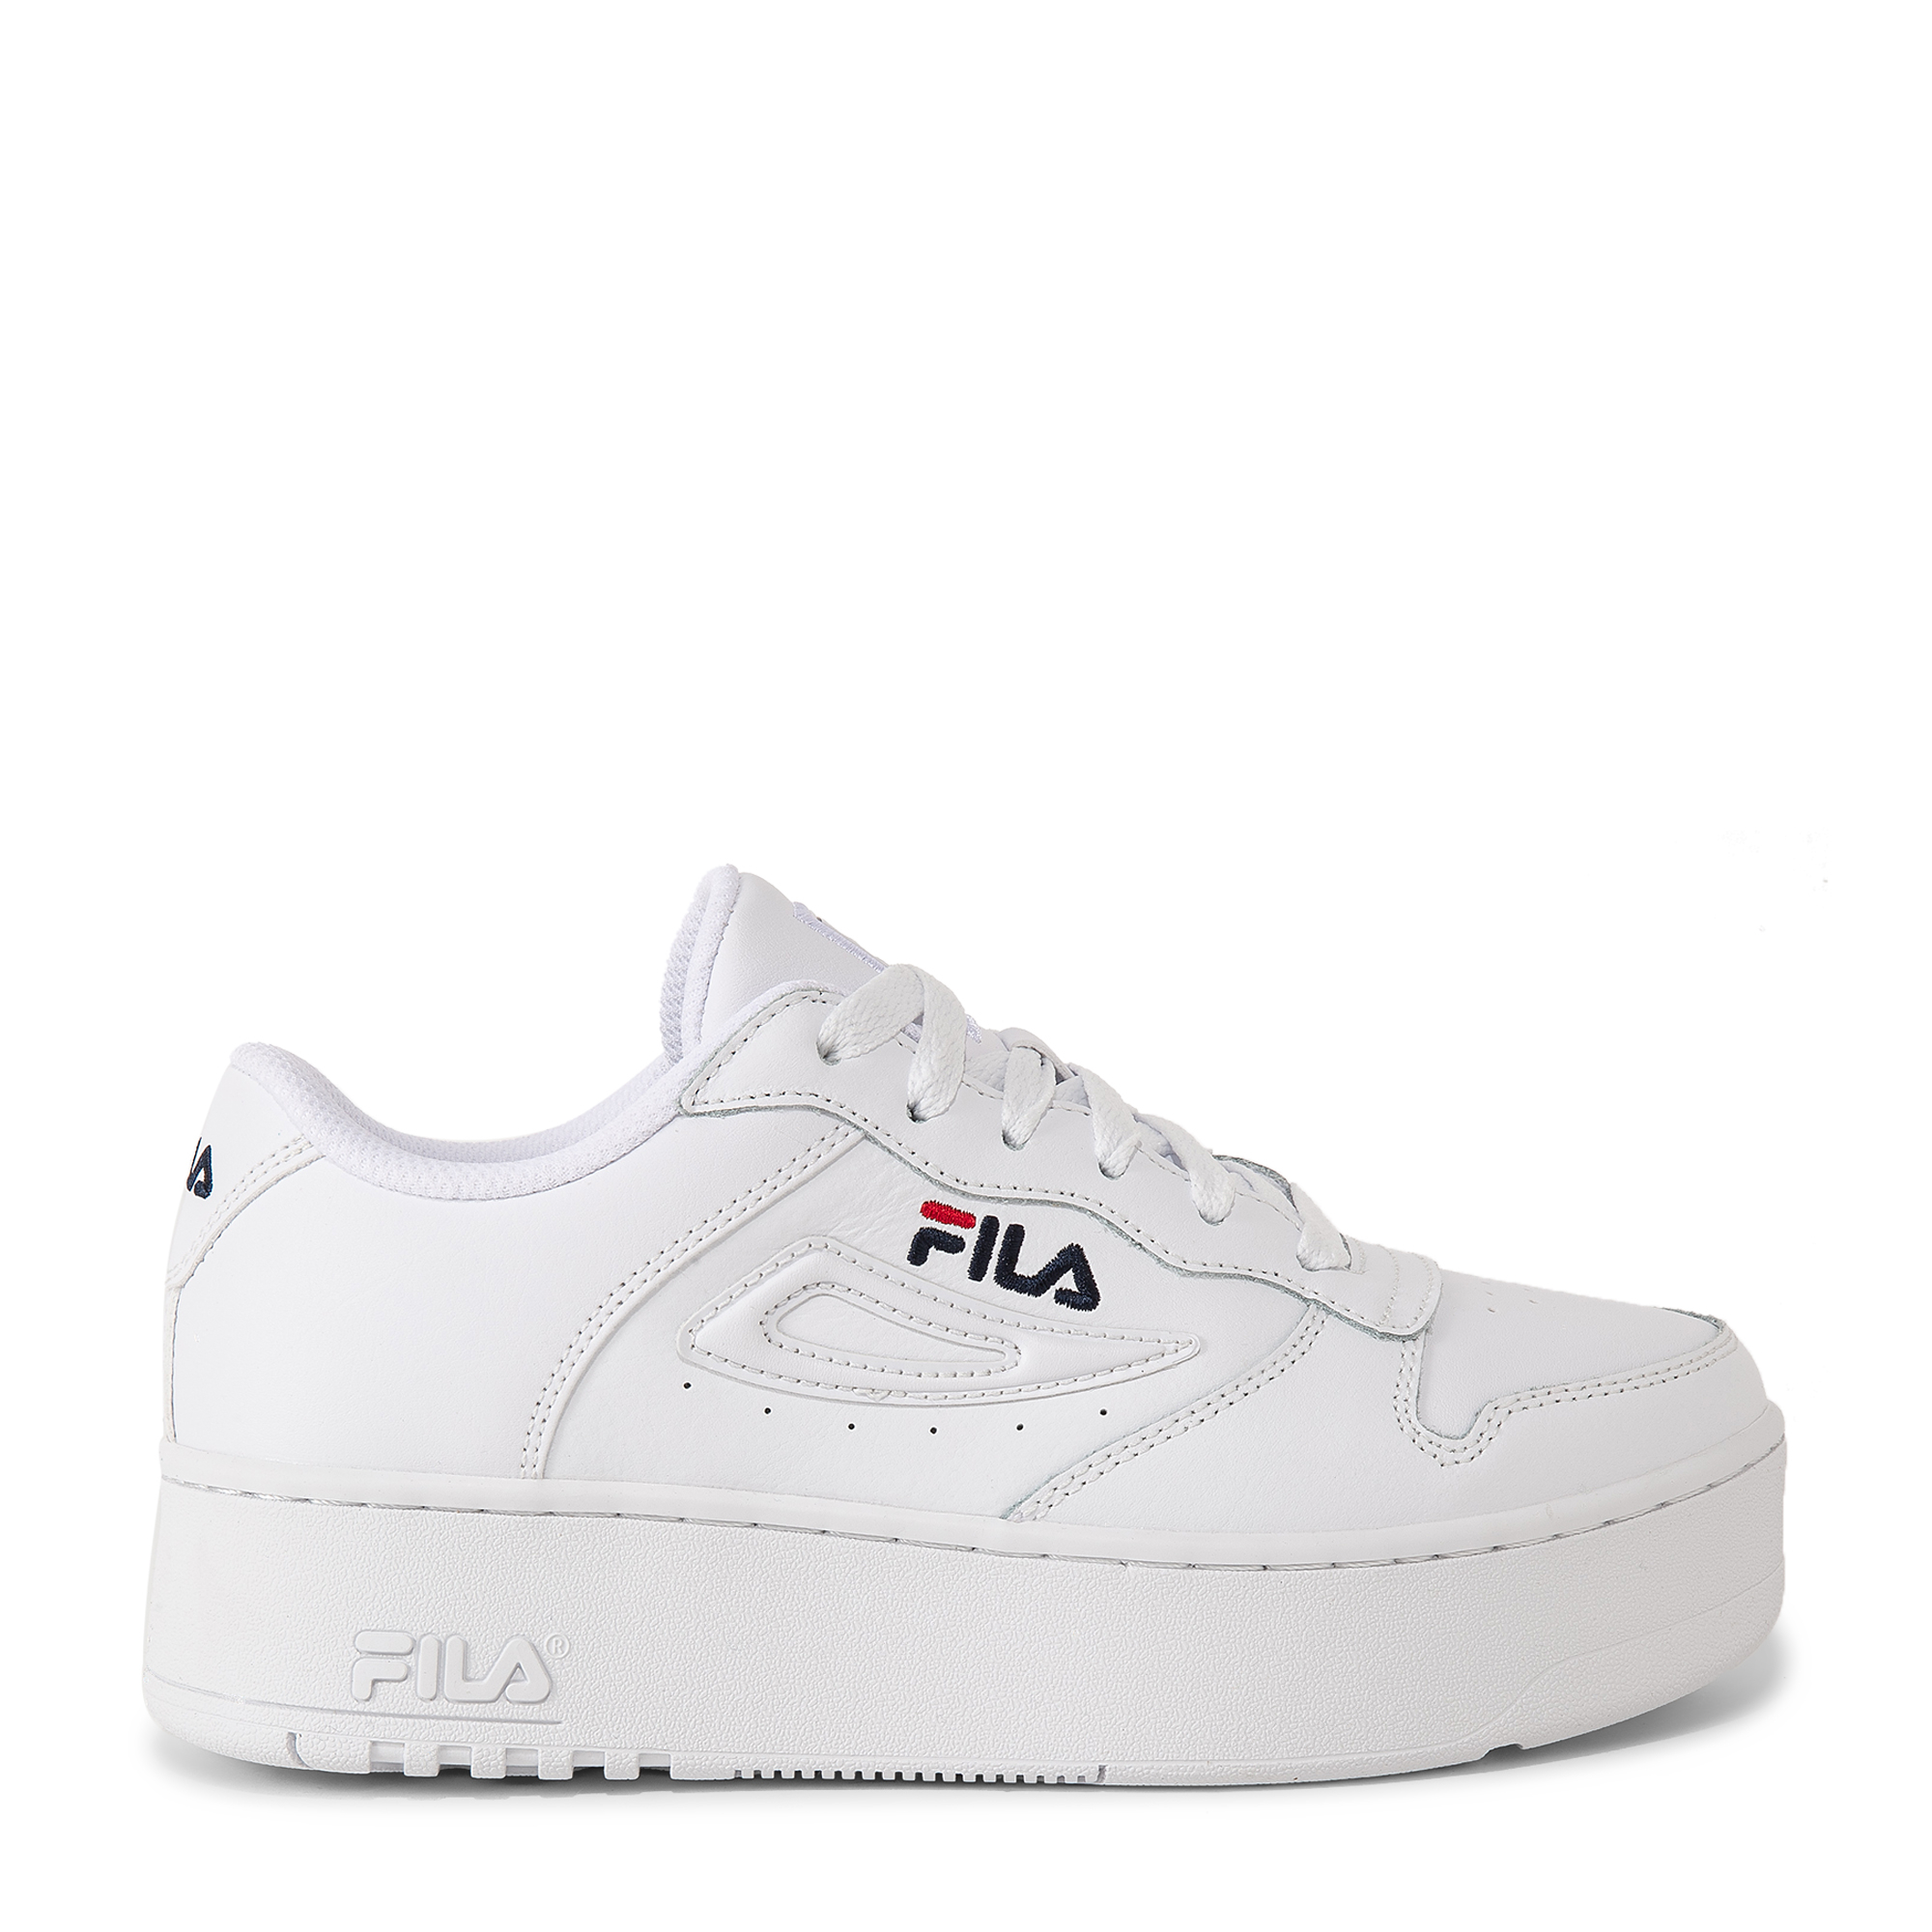 Fila FX 115 DSX sneakers for Women - White in KSA | Level Shoes